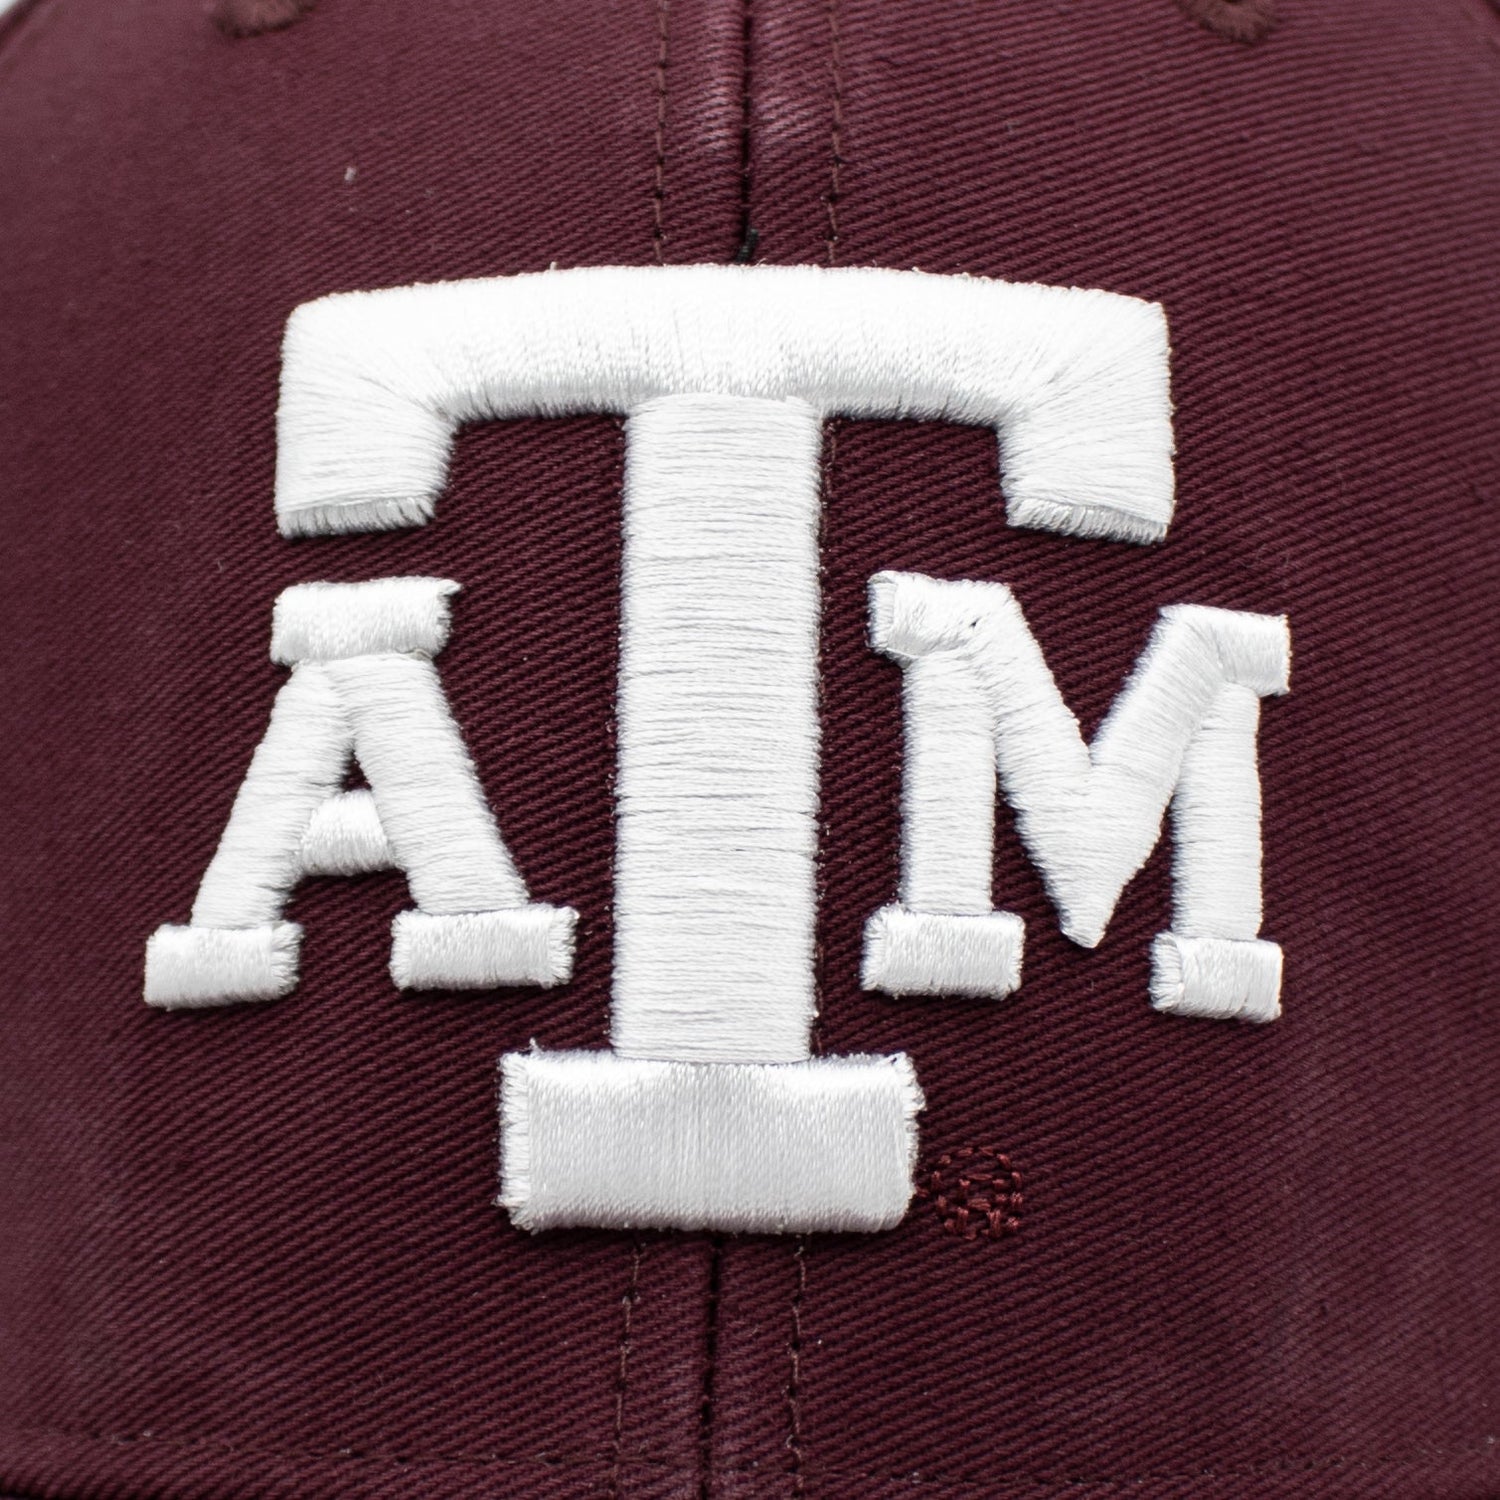 Texas A&M '47 Brand Legends Mvp Block Atm Hat